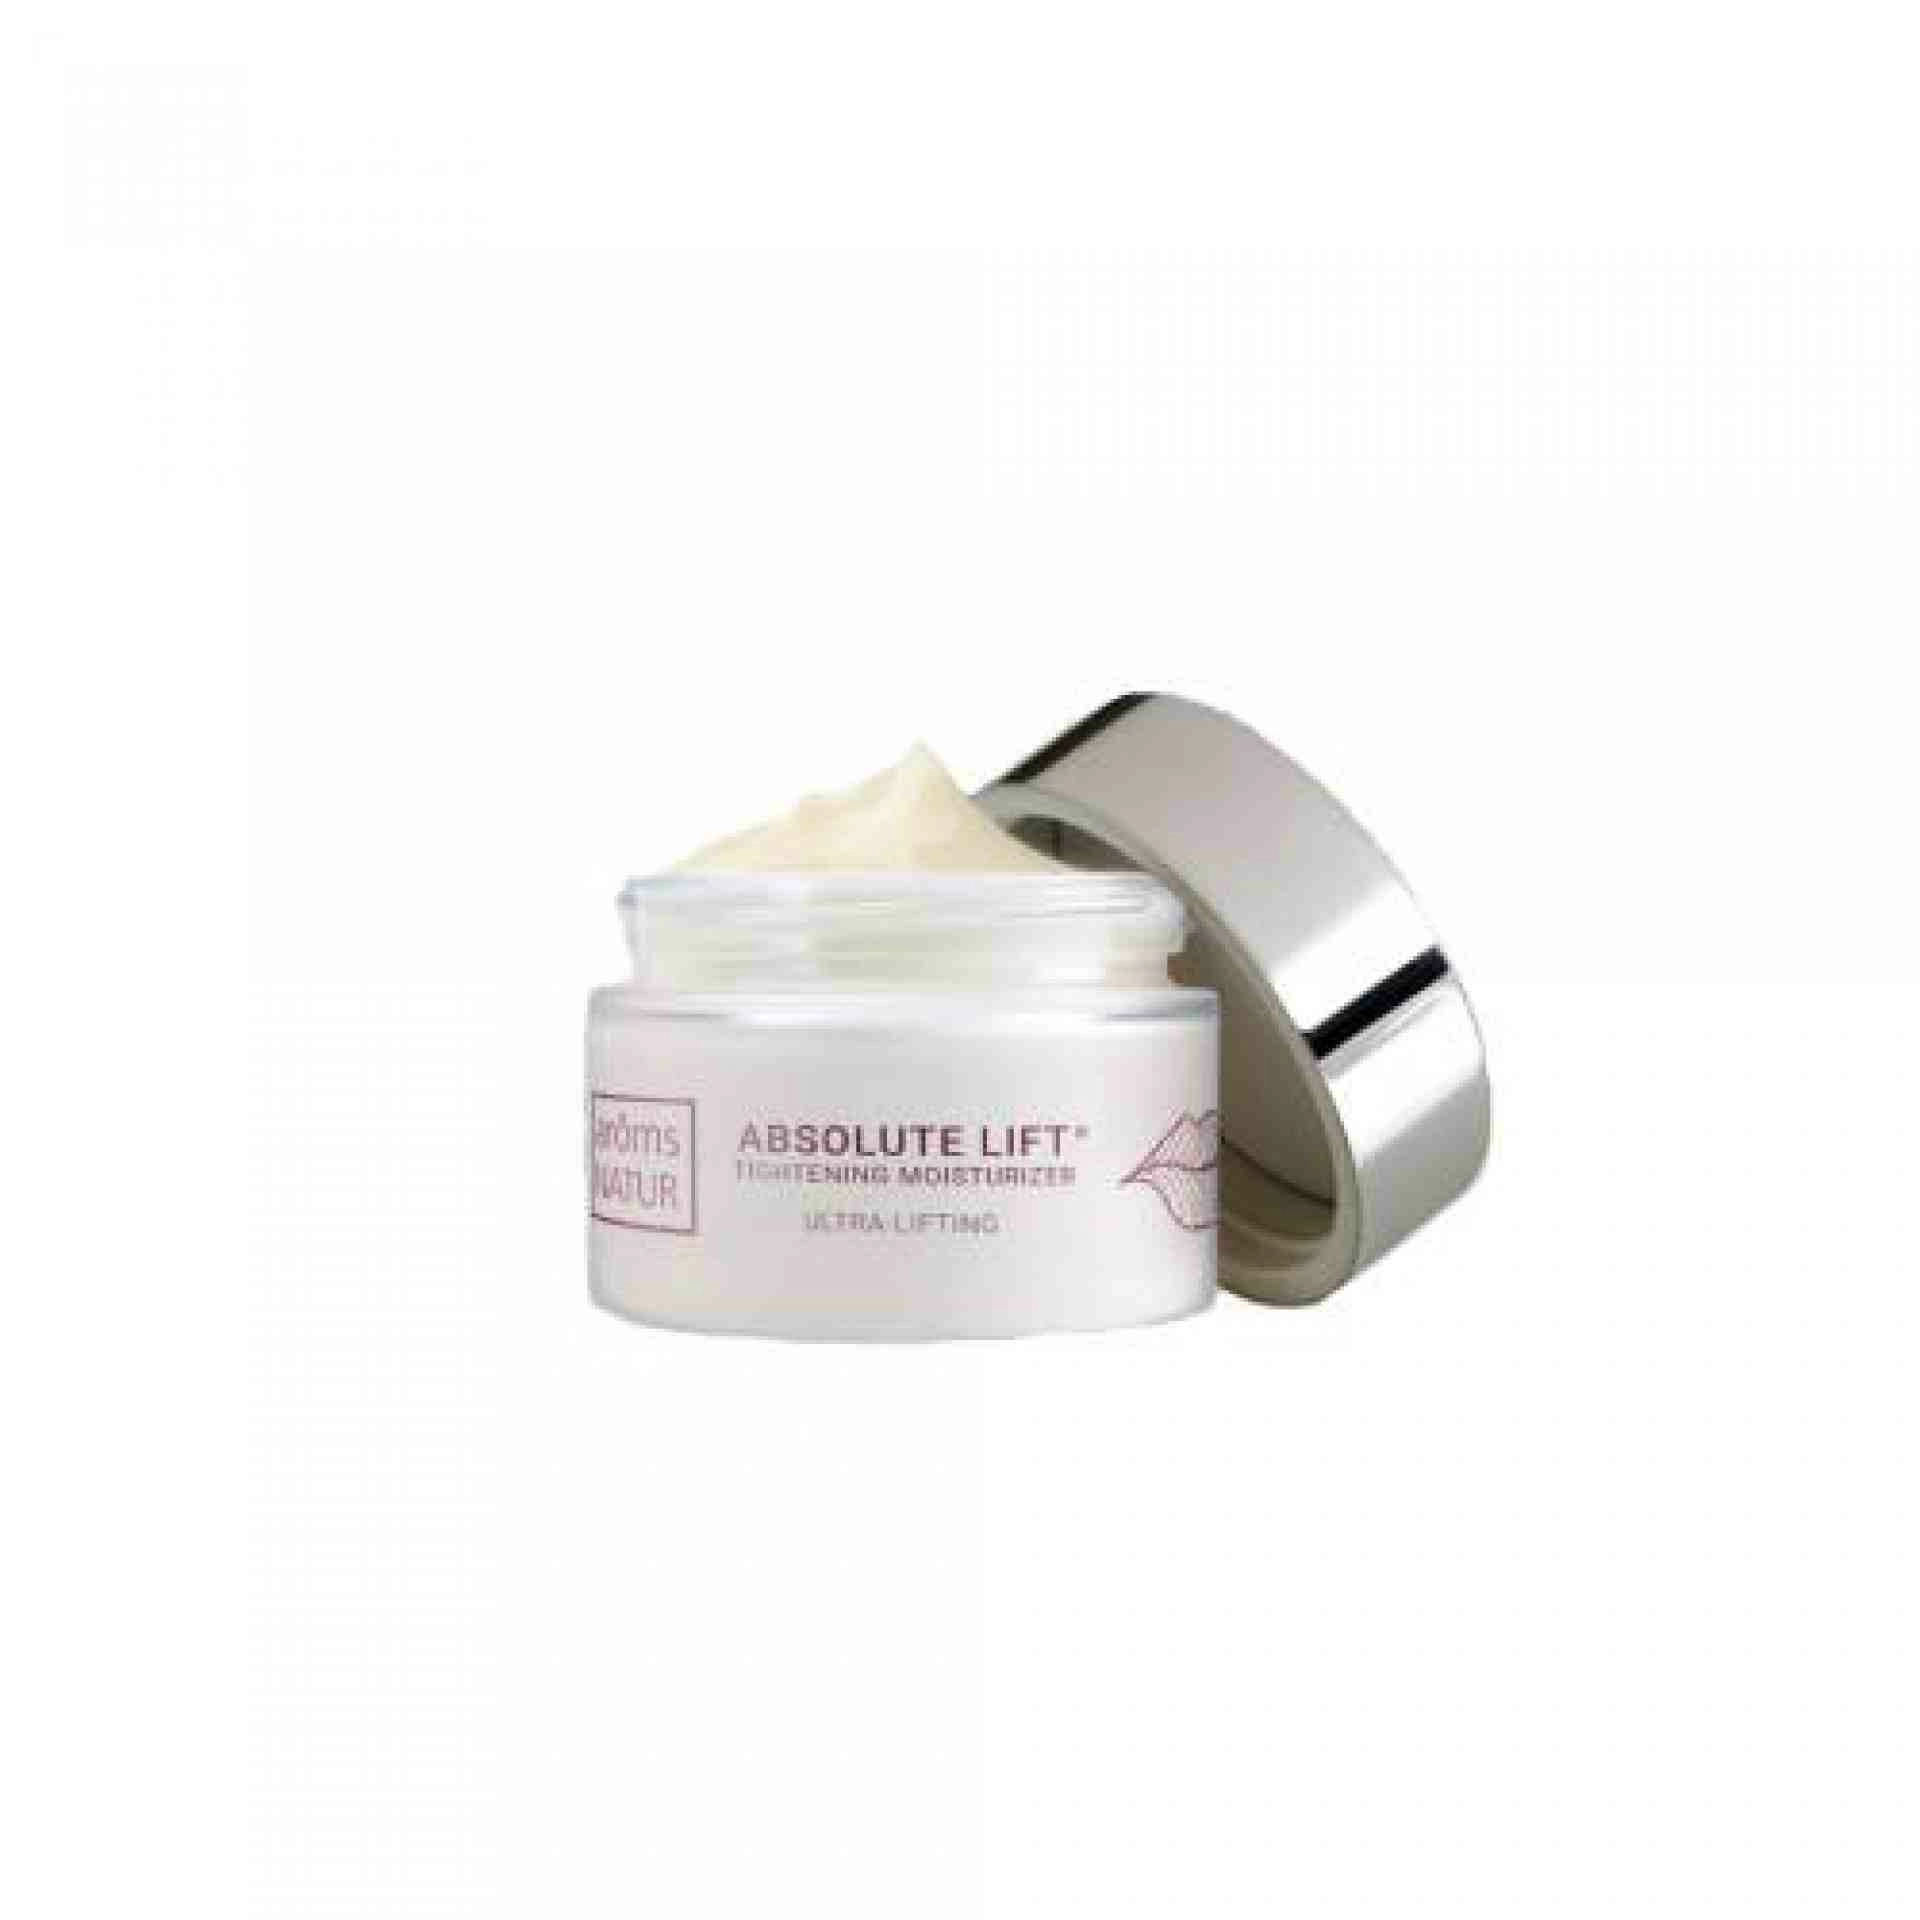 Absolute Lift | Crema reafirmante 50ml - Lift & Firming Cosmetics - Arôms Natur ®